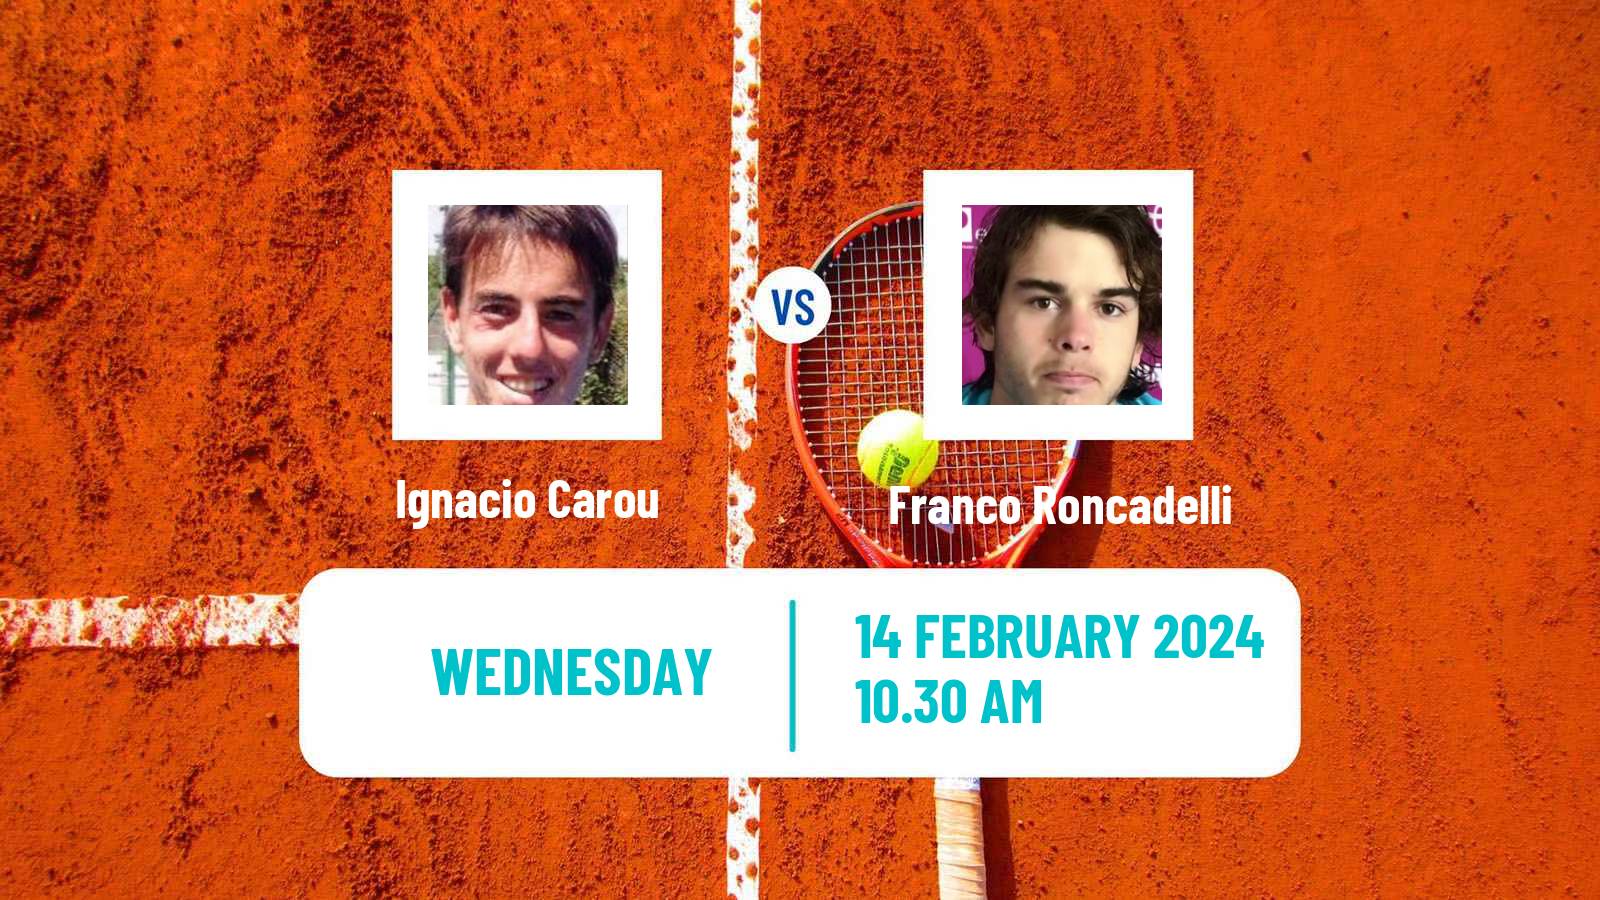 Tennis ITF M25 Punta Del Este 2 Men Ignacio Carou - Franco Roncadelli